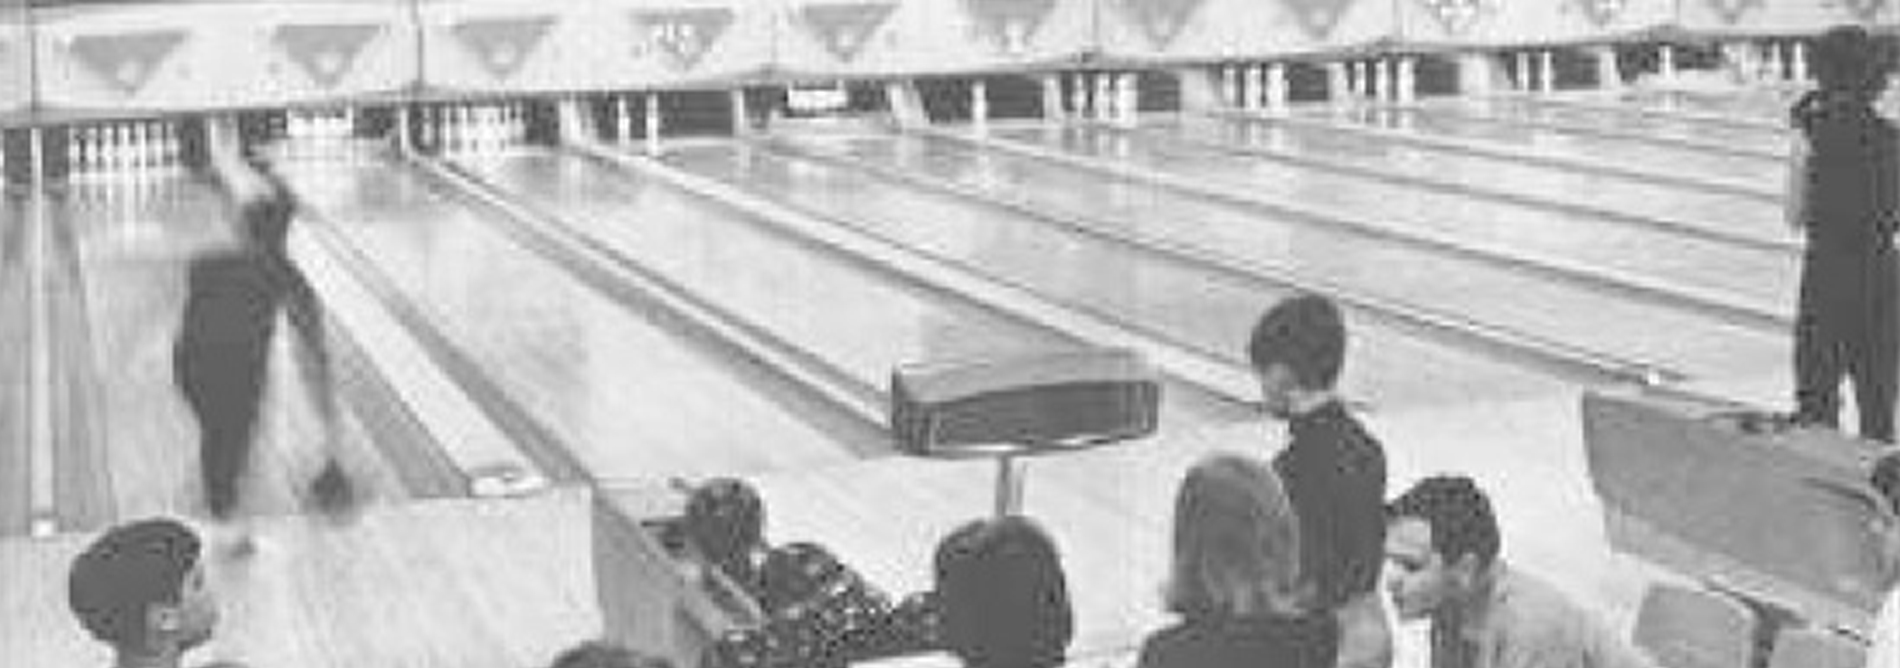 Bowling-QubicaAMF-history-carosel-2.jpg